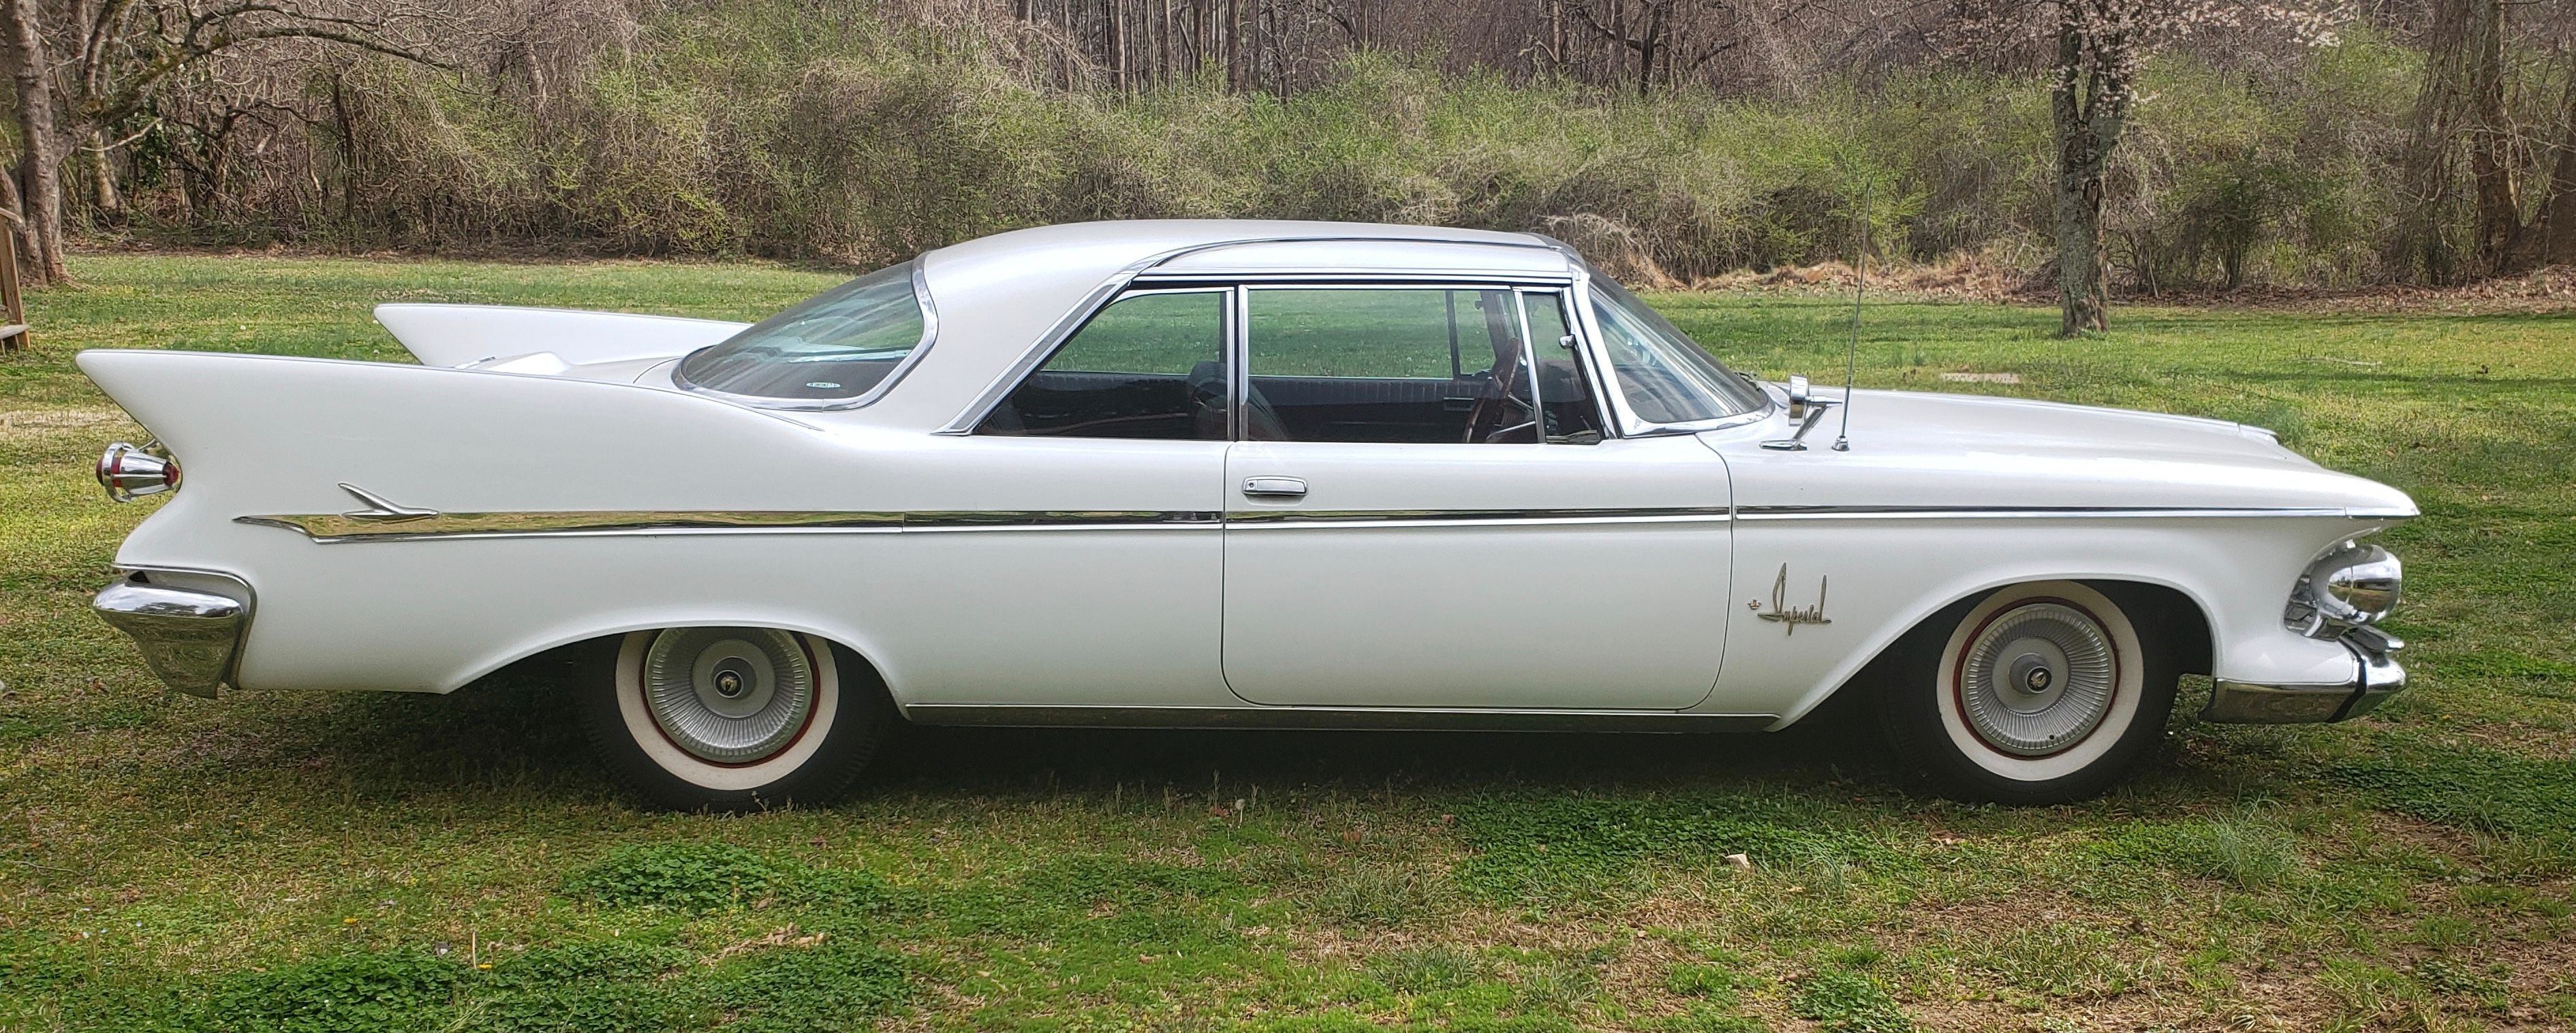 1961 Chrysler Imperial | GAA Classic Cars